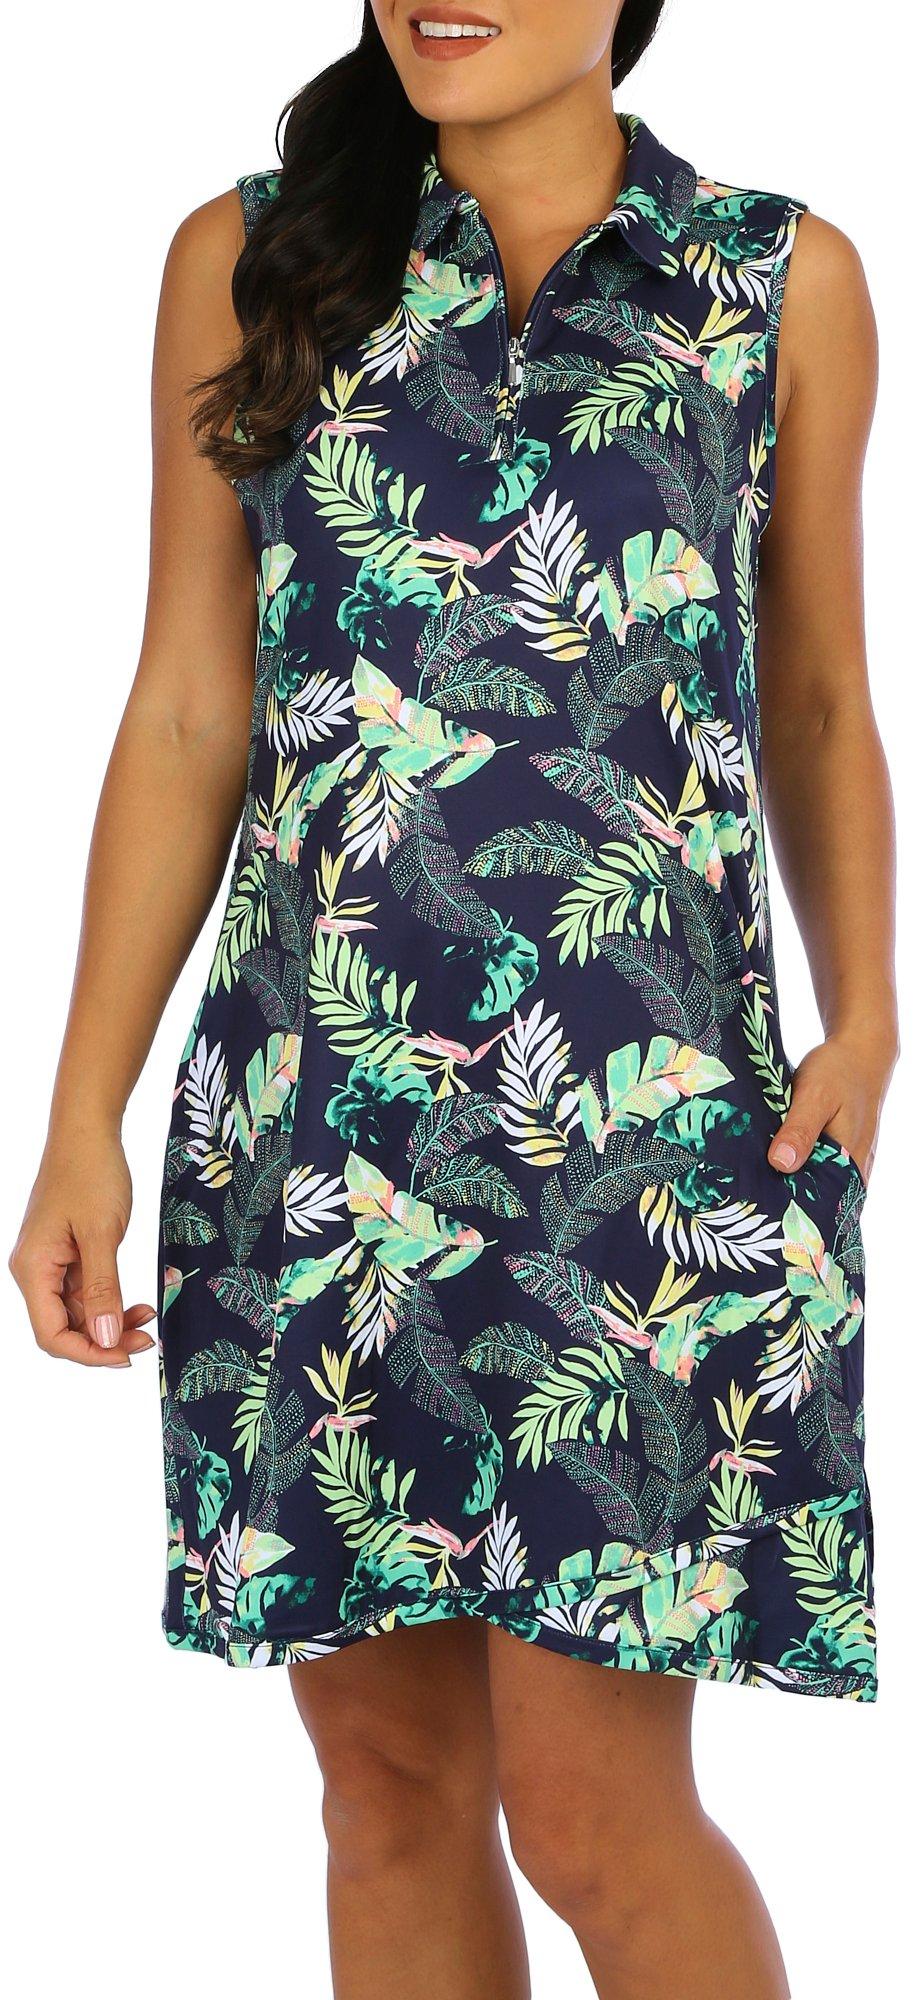 Coral Bay Golf Petite 1/4 Zip Sleeveless Pocket Dress